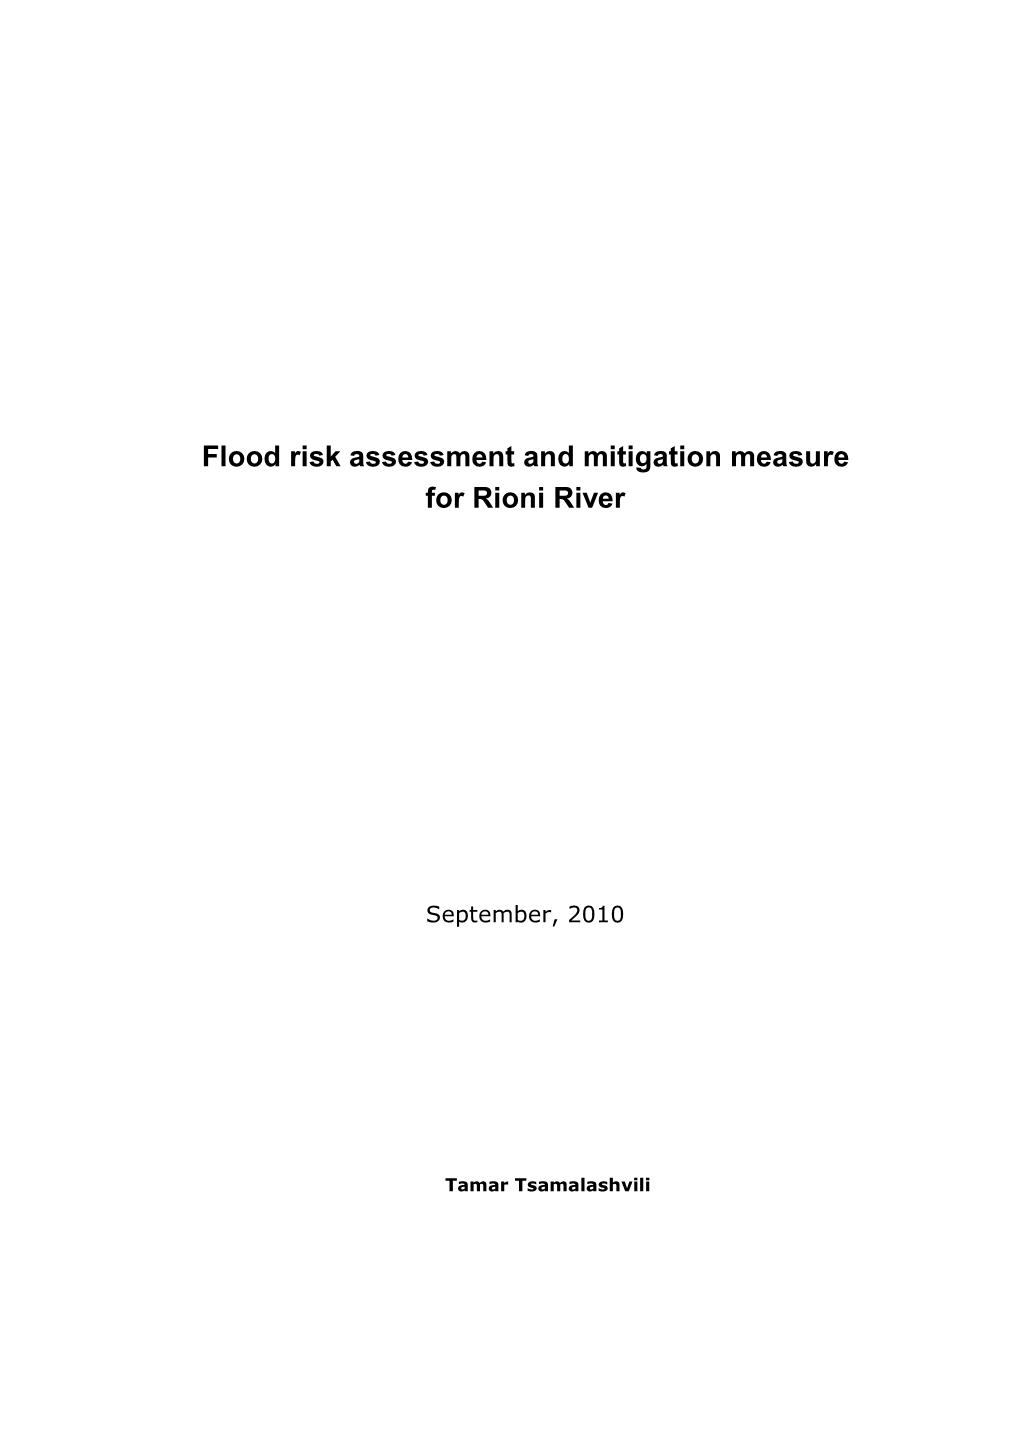 Flood Risk Assessment and Mitigation Measure for Rioni River